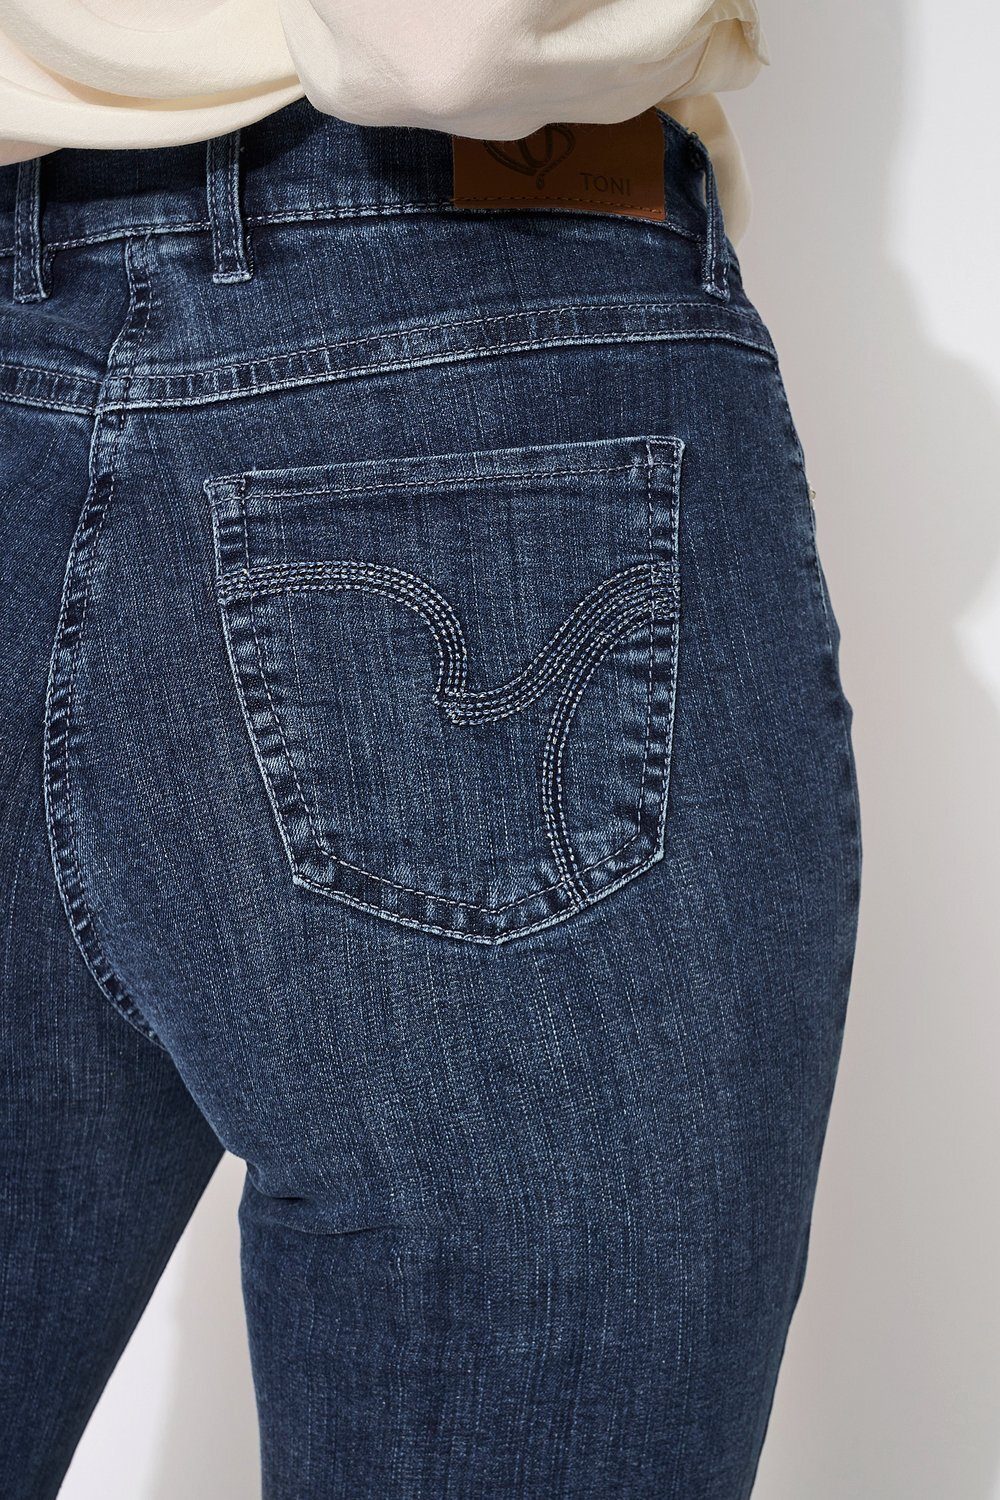 TONI 5-Pocket-Jeans Perfect Shape mit Bauch Shaping-Effekt an und mittelblau 502 Po 